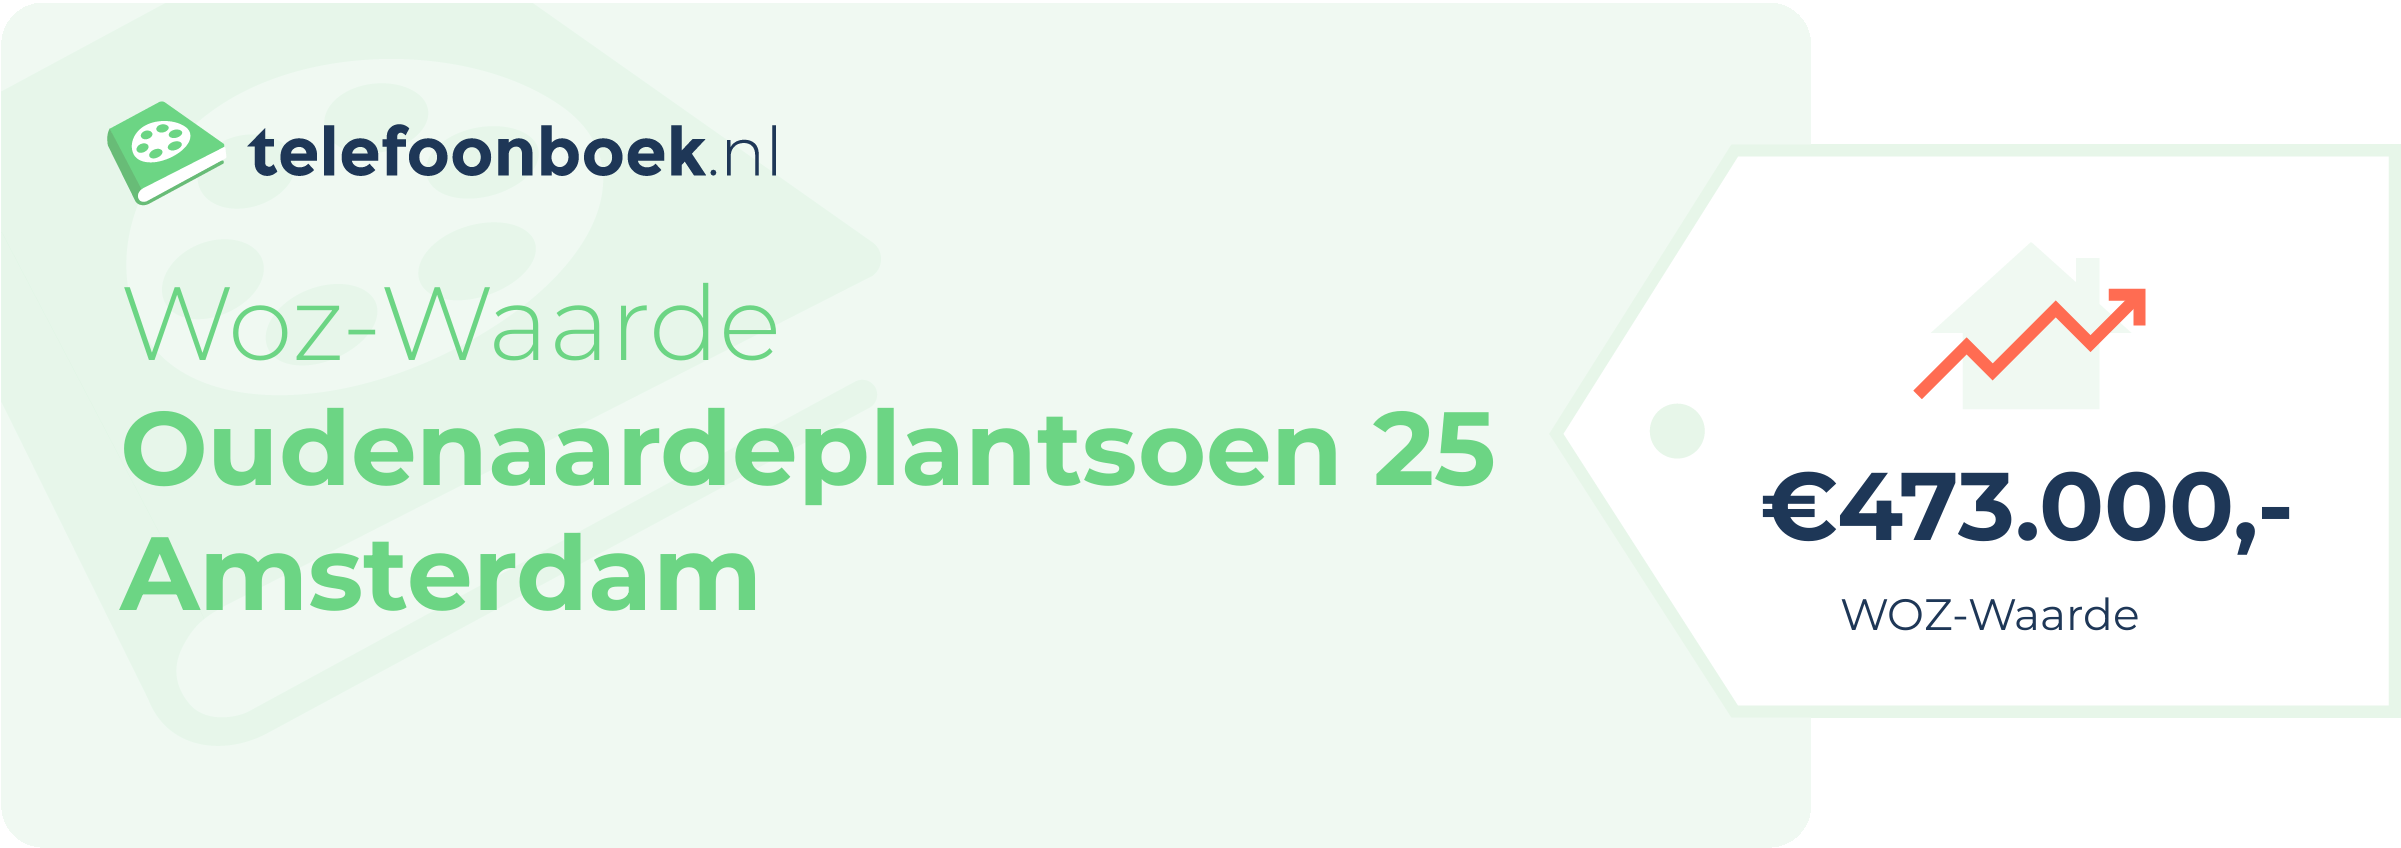 WOZ-waarde Oudenaardeplantsoen 25 Amsterdam